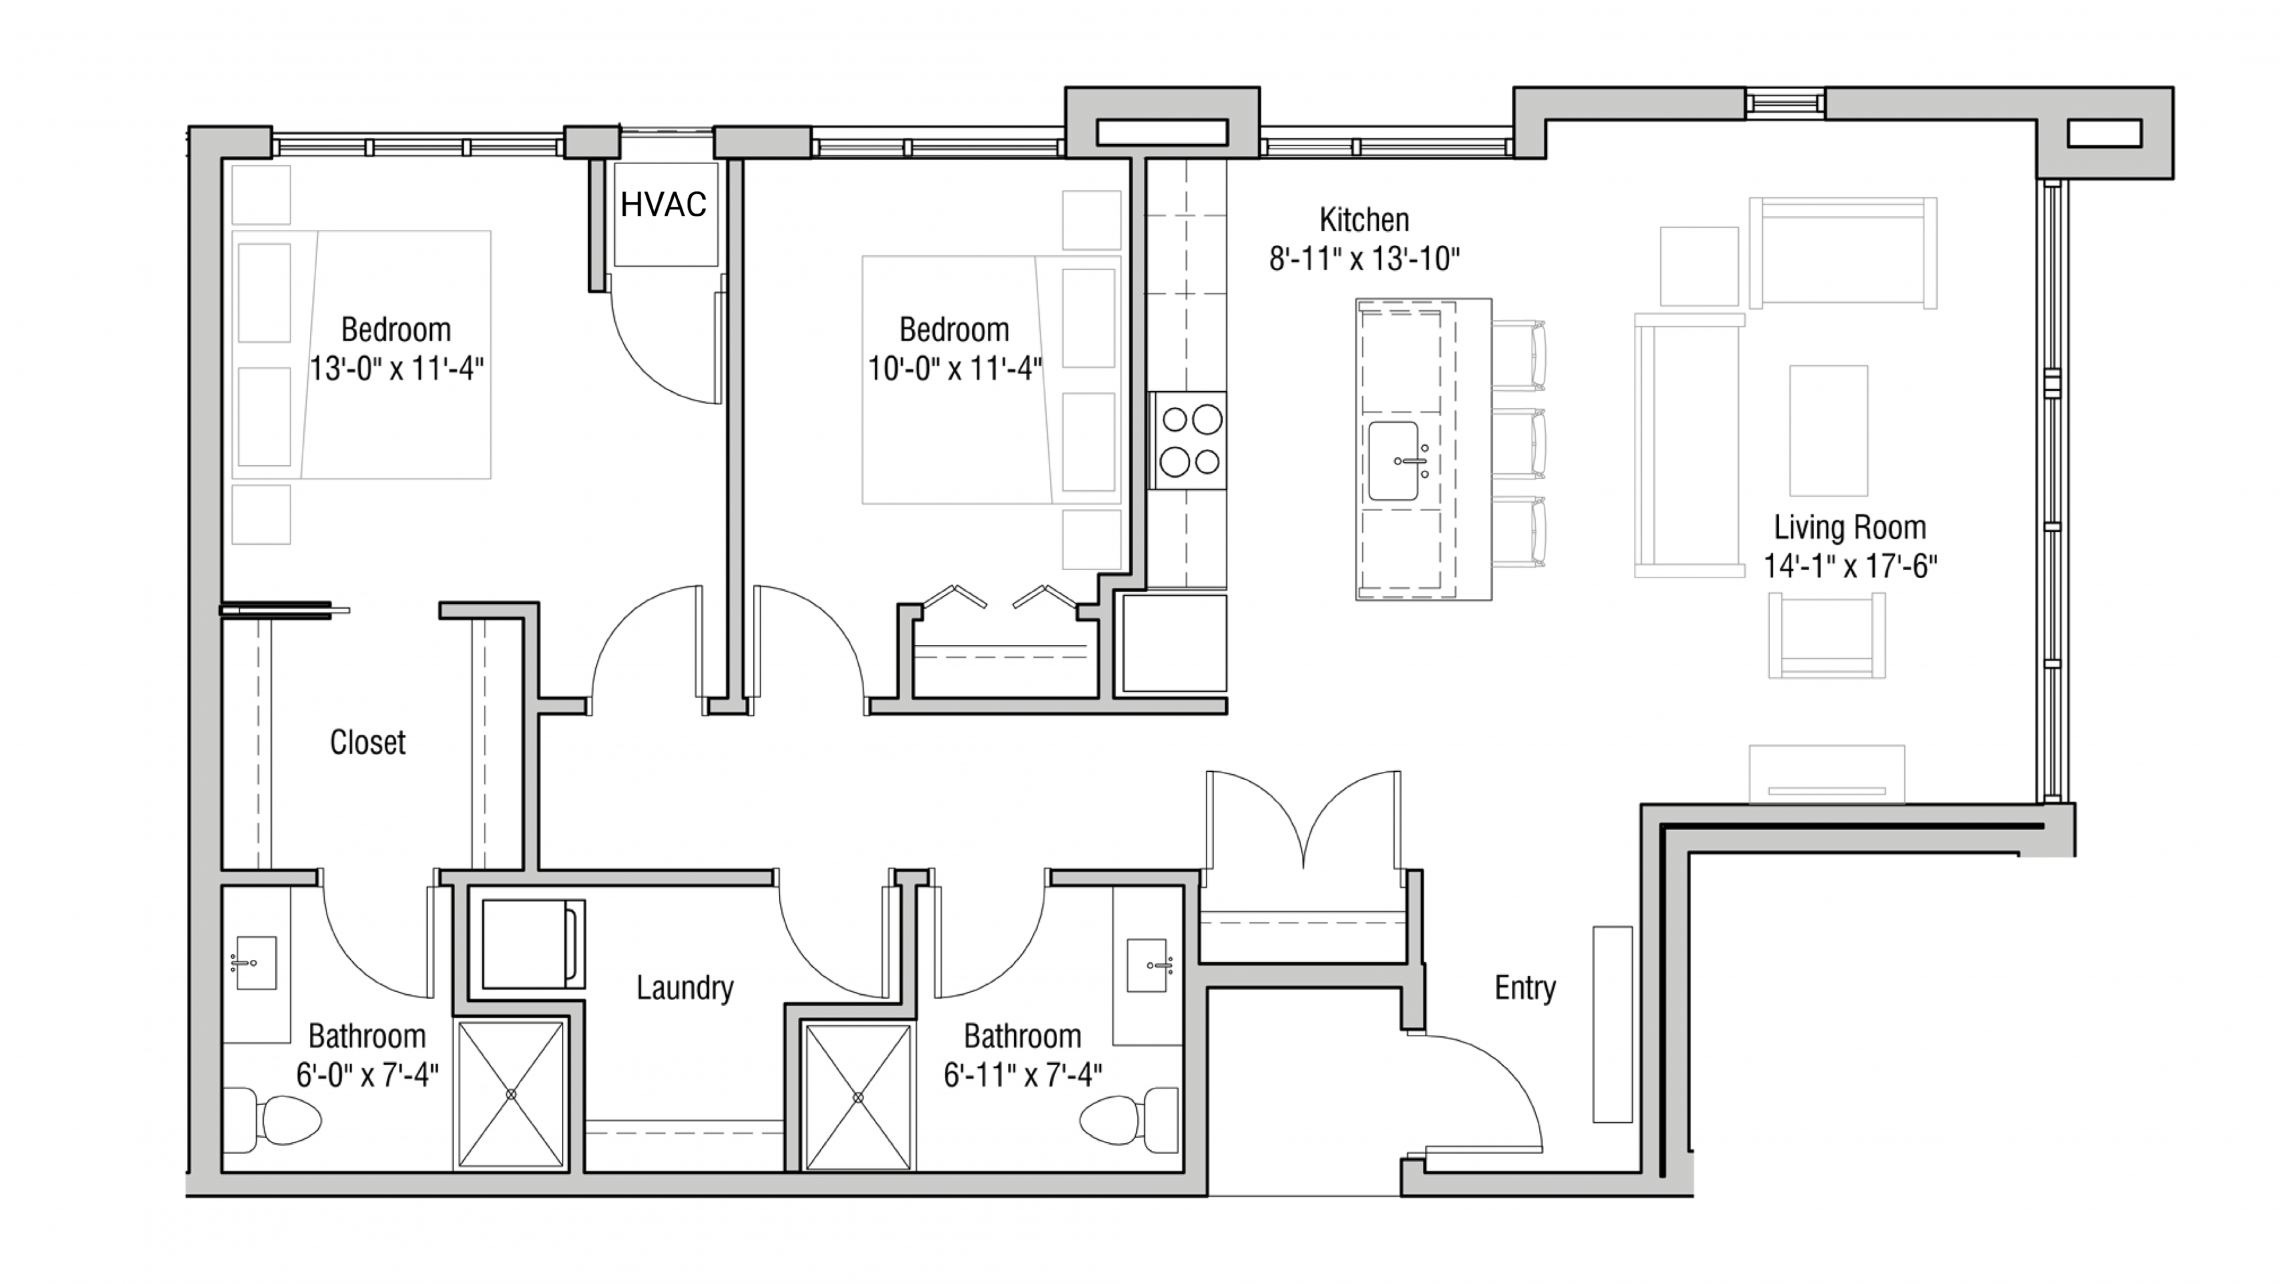 ULI Quarter Row 415 - Two Bedroom, Two Bathroom